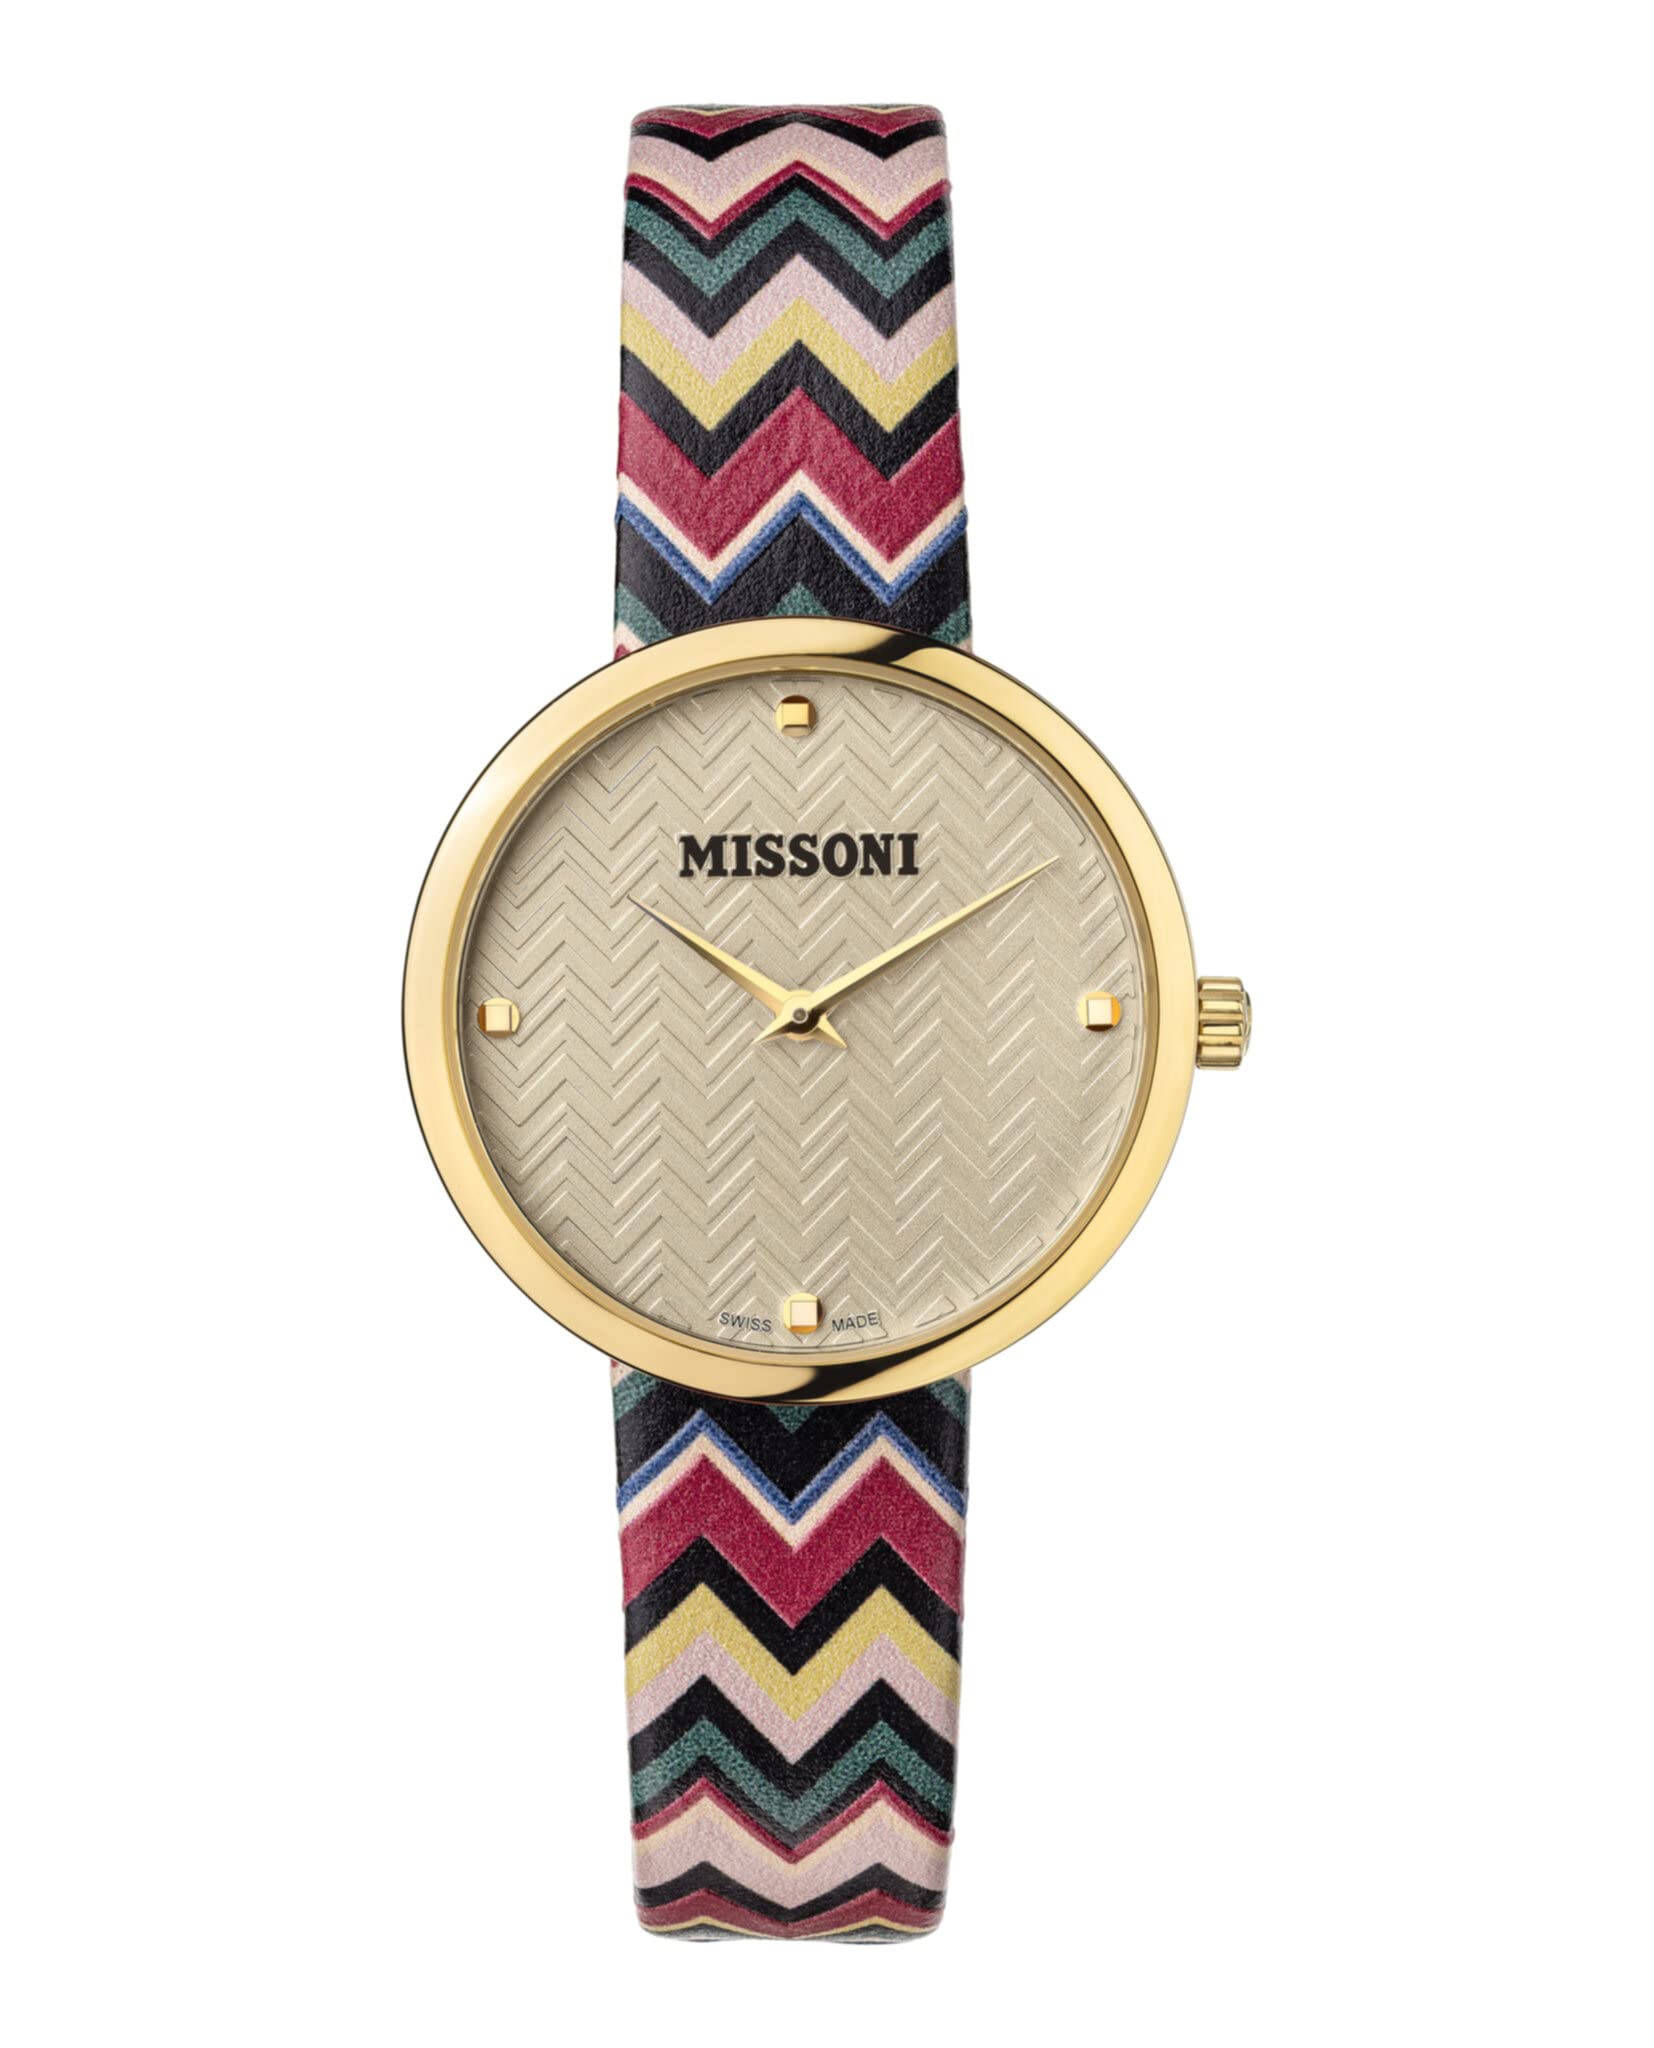 Missoni Missoni M1 Leather Watch